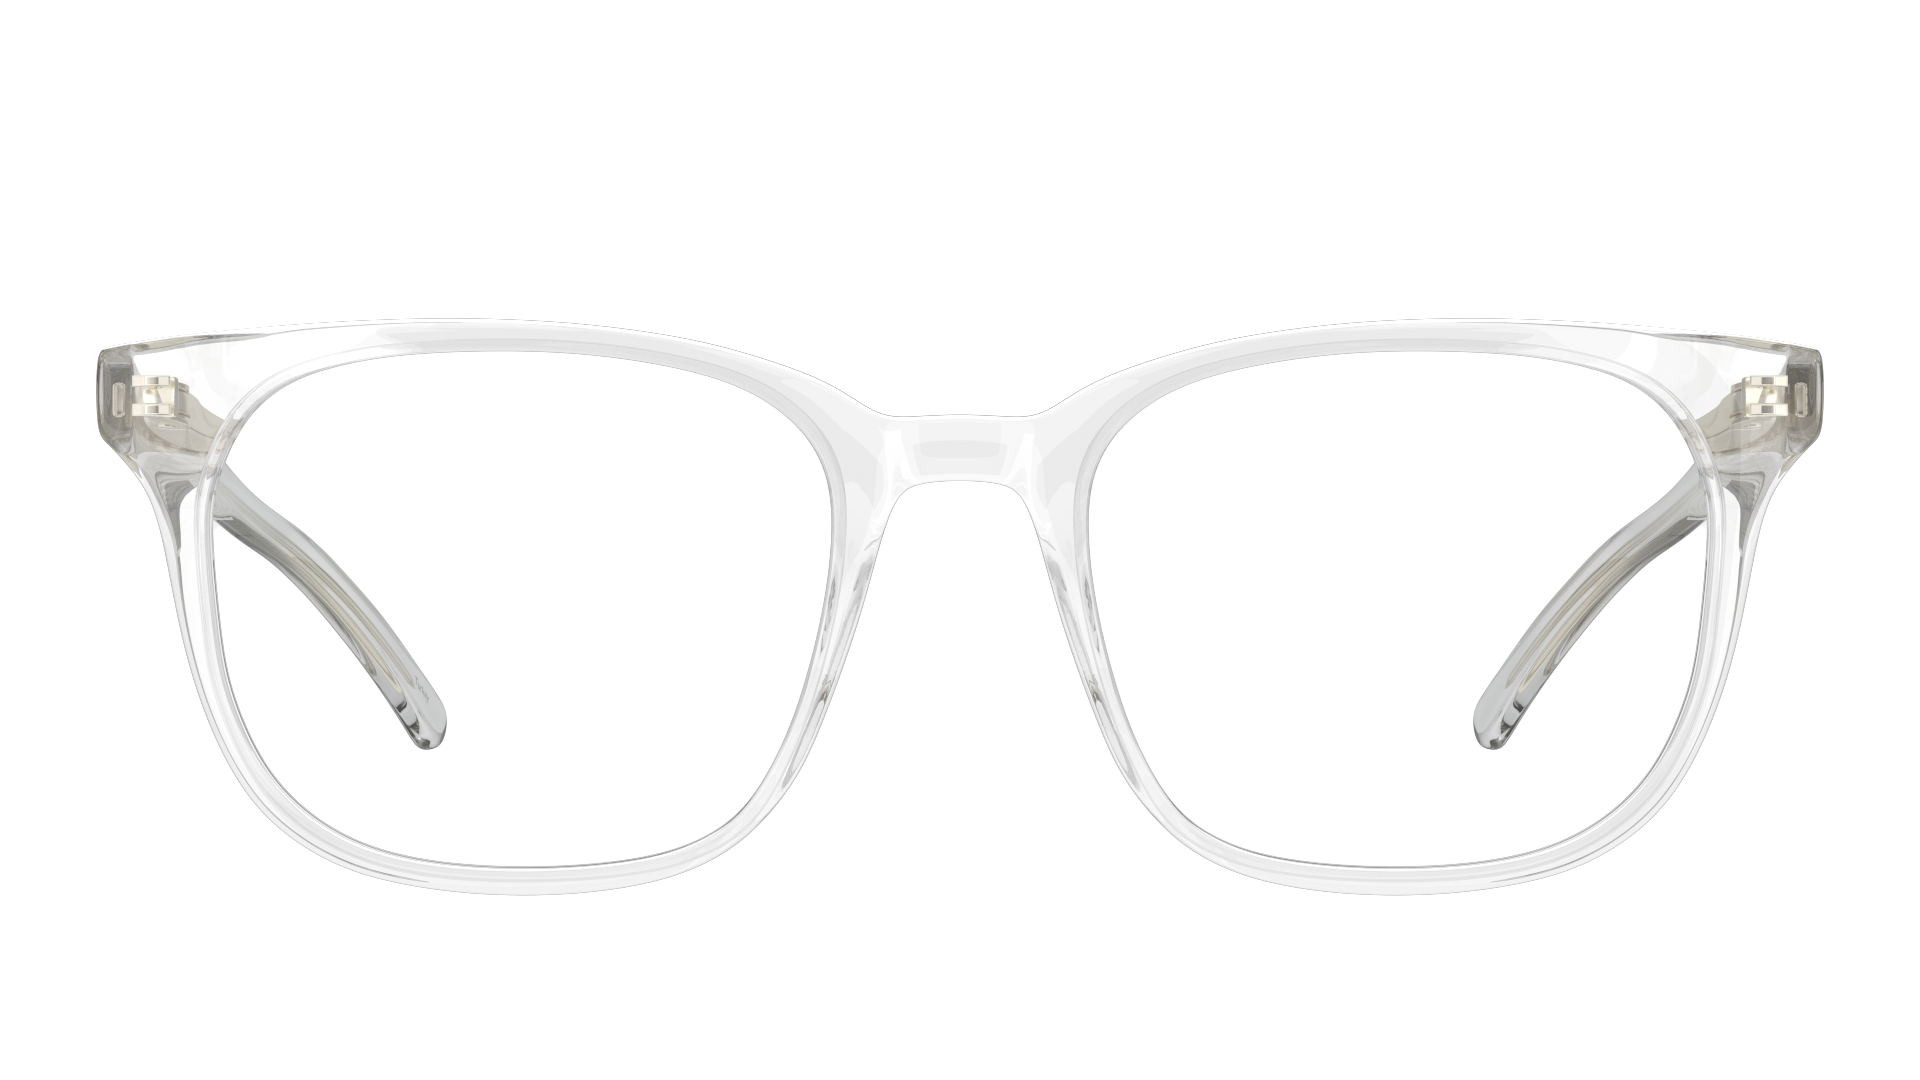 Front Unofficial UNOM0225 Glasses Transparent / Transparent, Clear